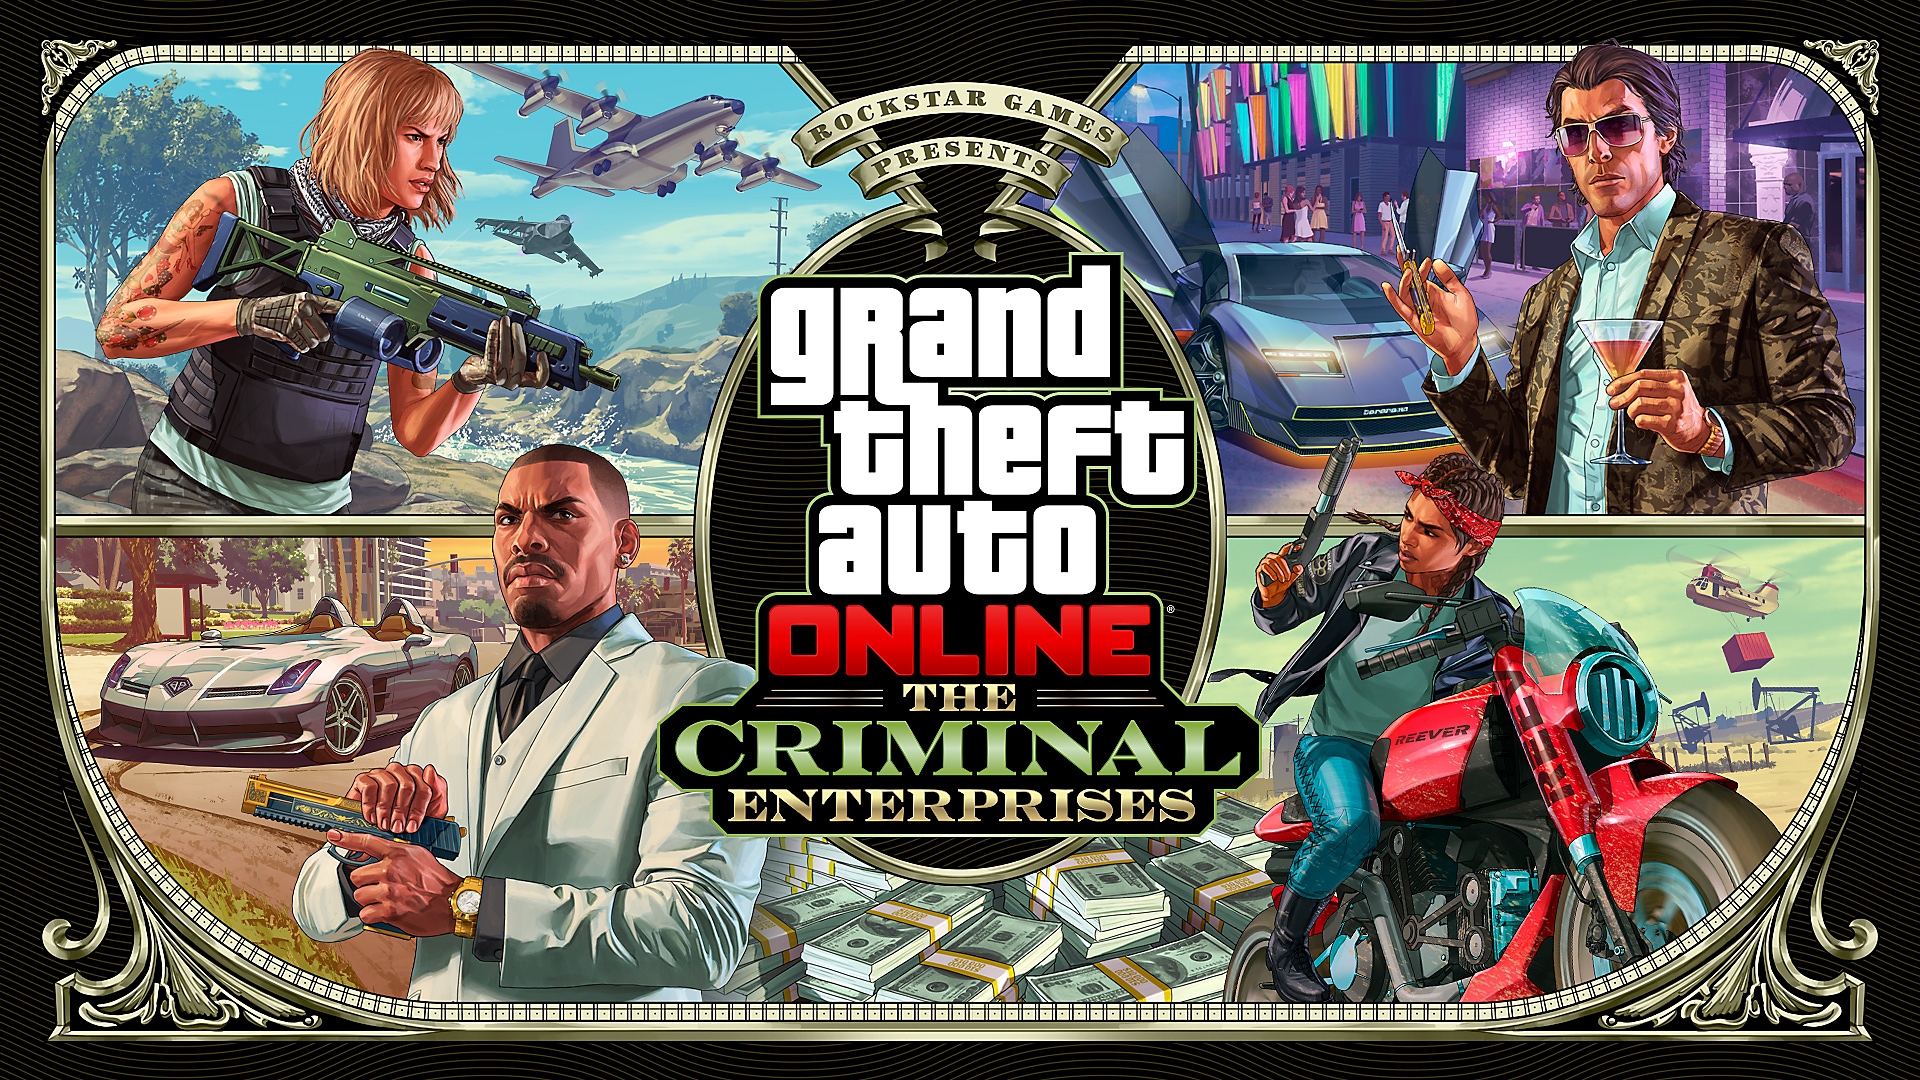 GTA Online - The Criminal Enterprises trailer